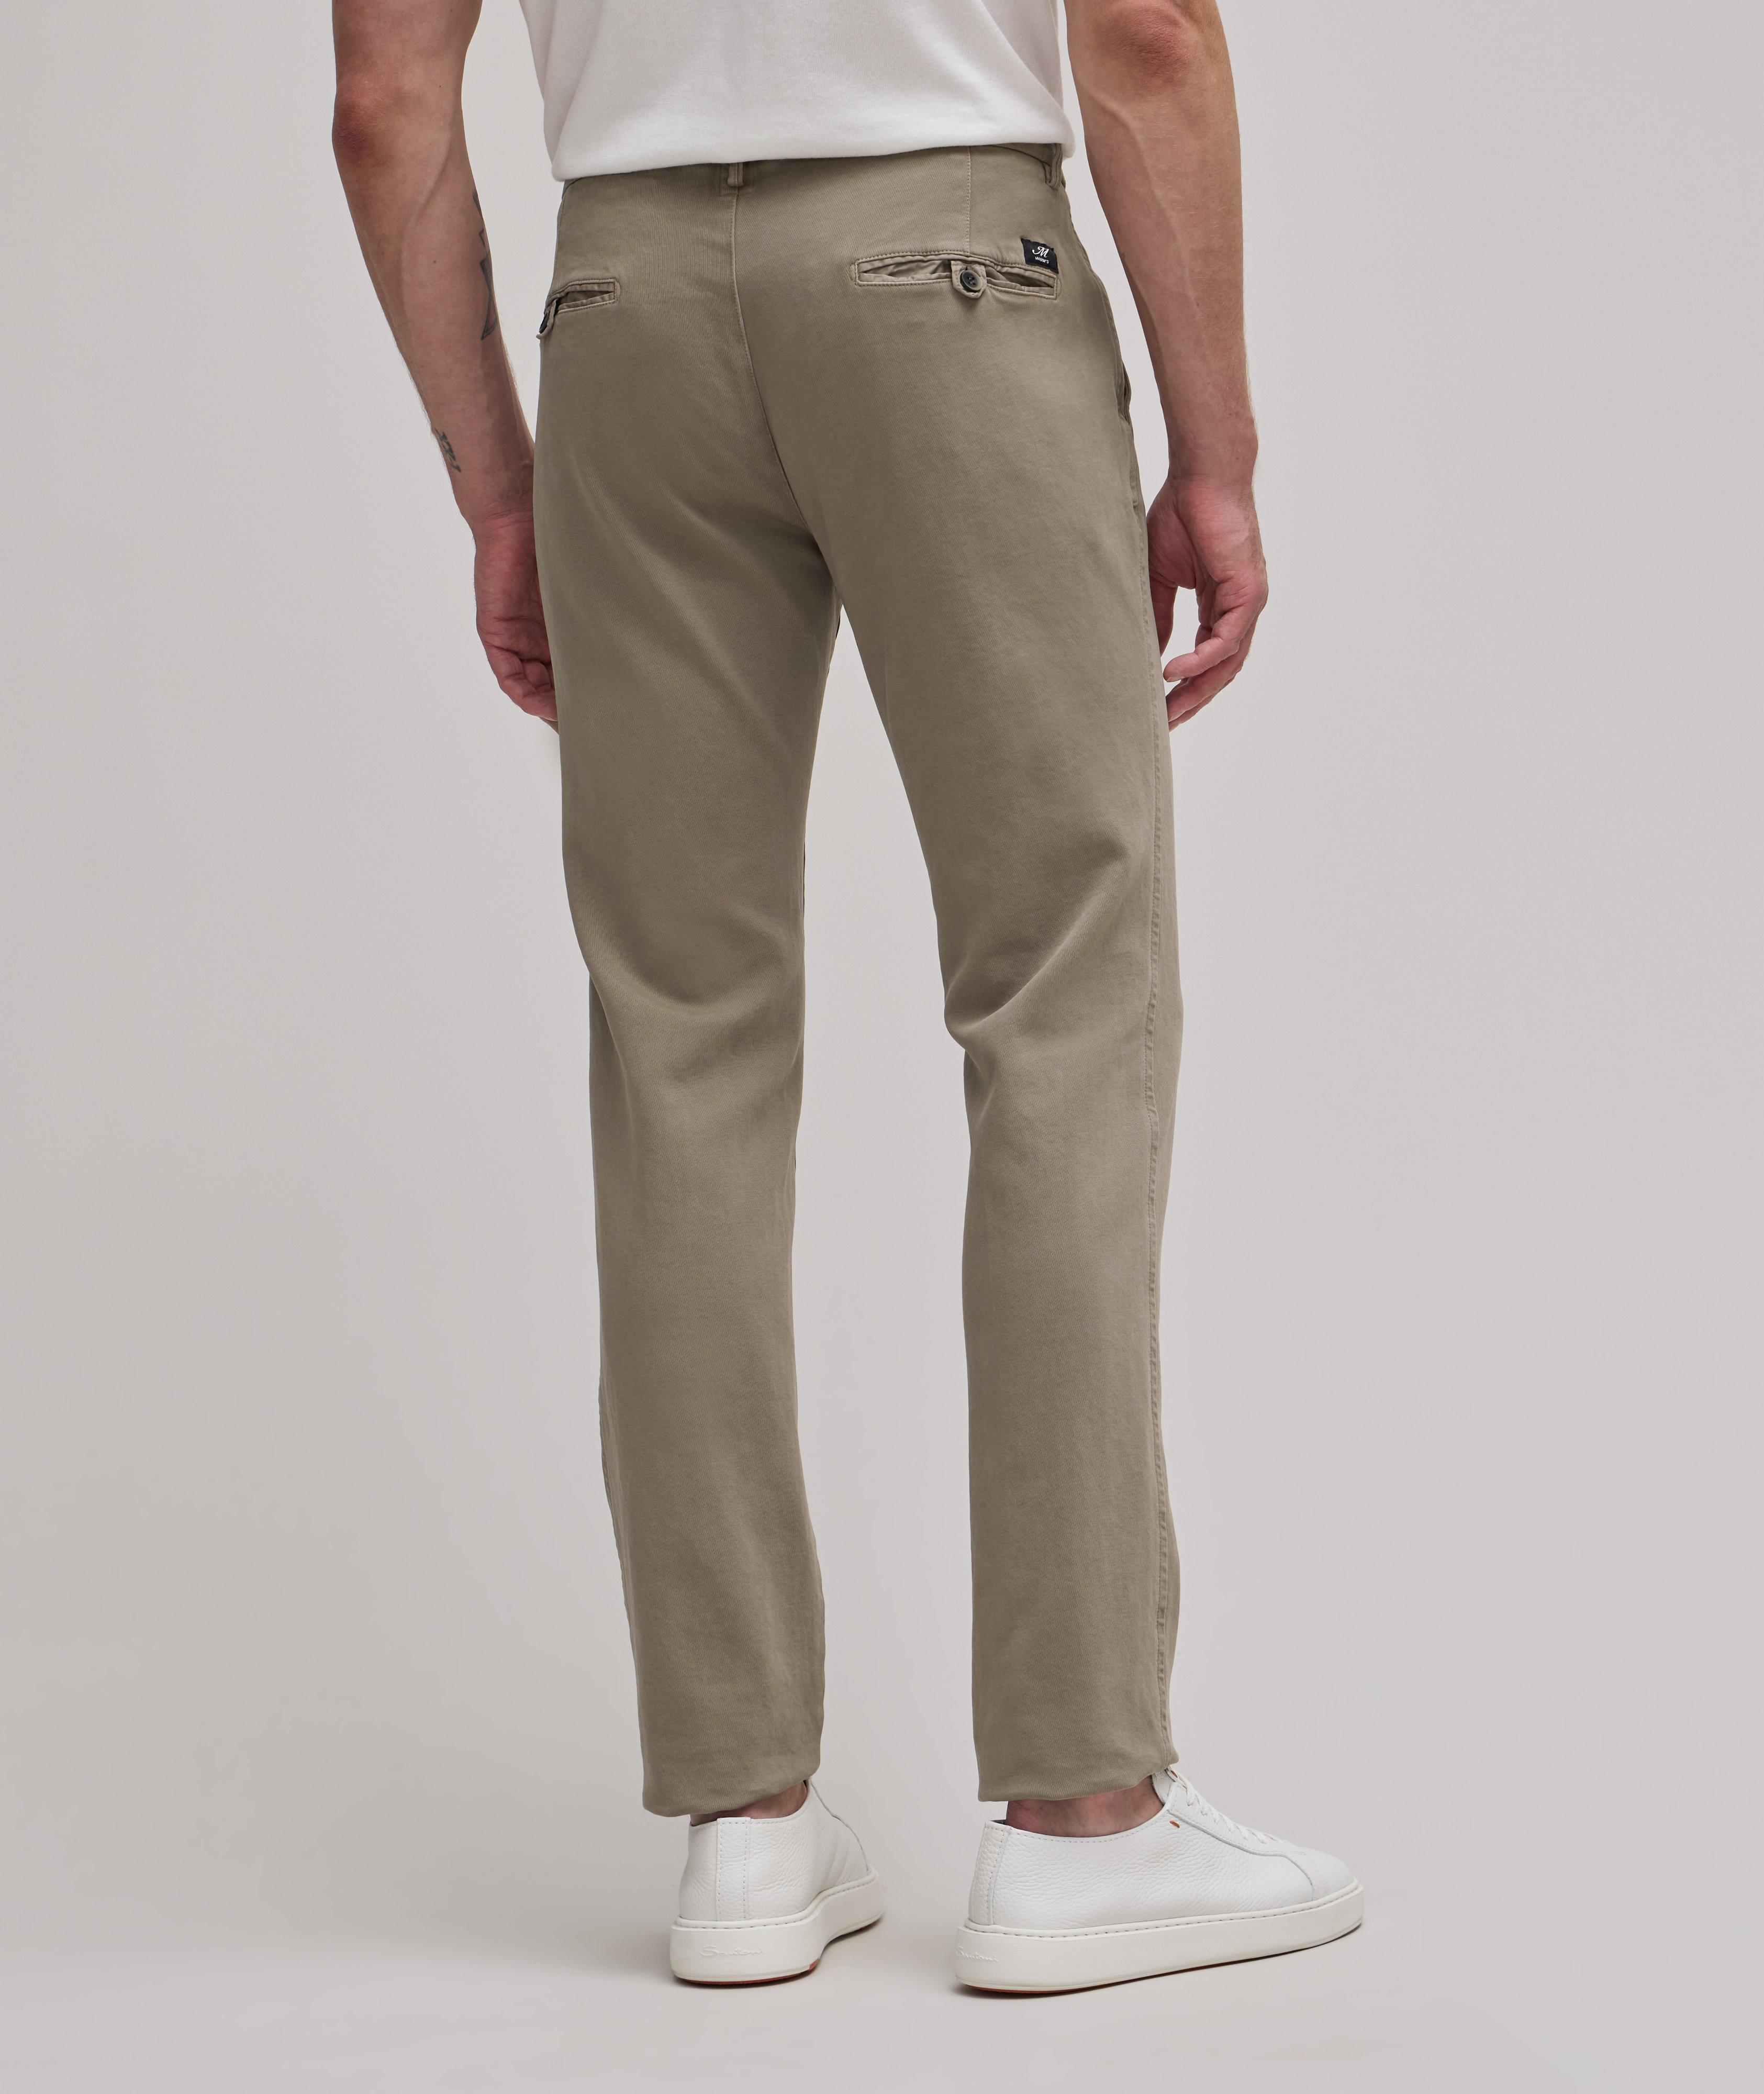 Mason's Slim-Fit Torino Jersey Stretch-Cotton Pants, Pants